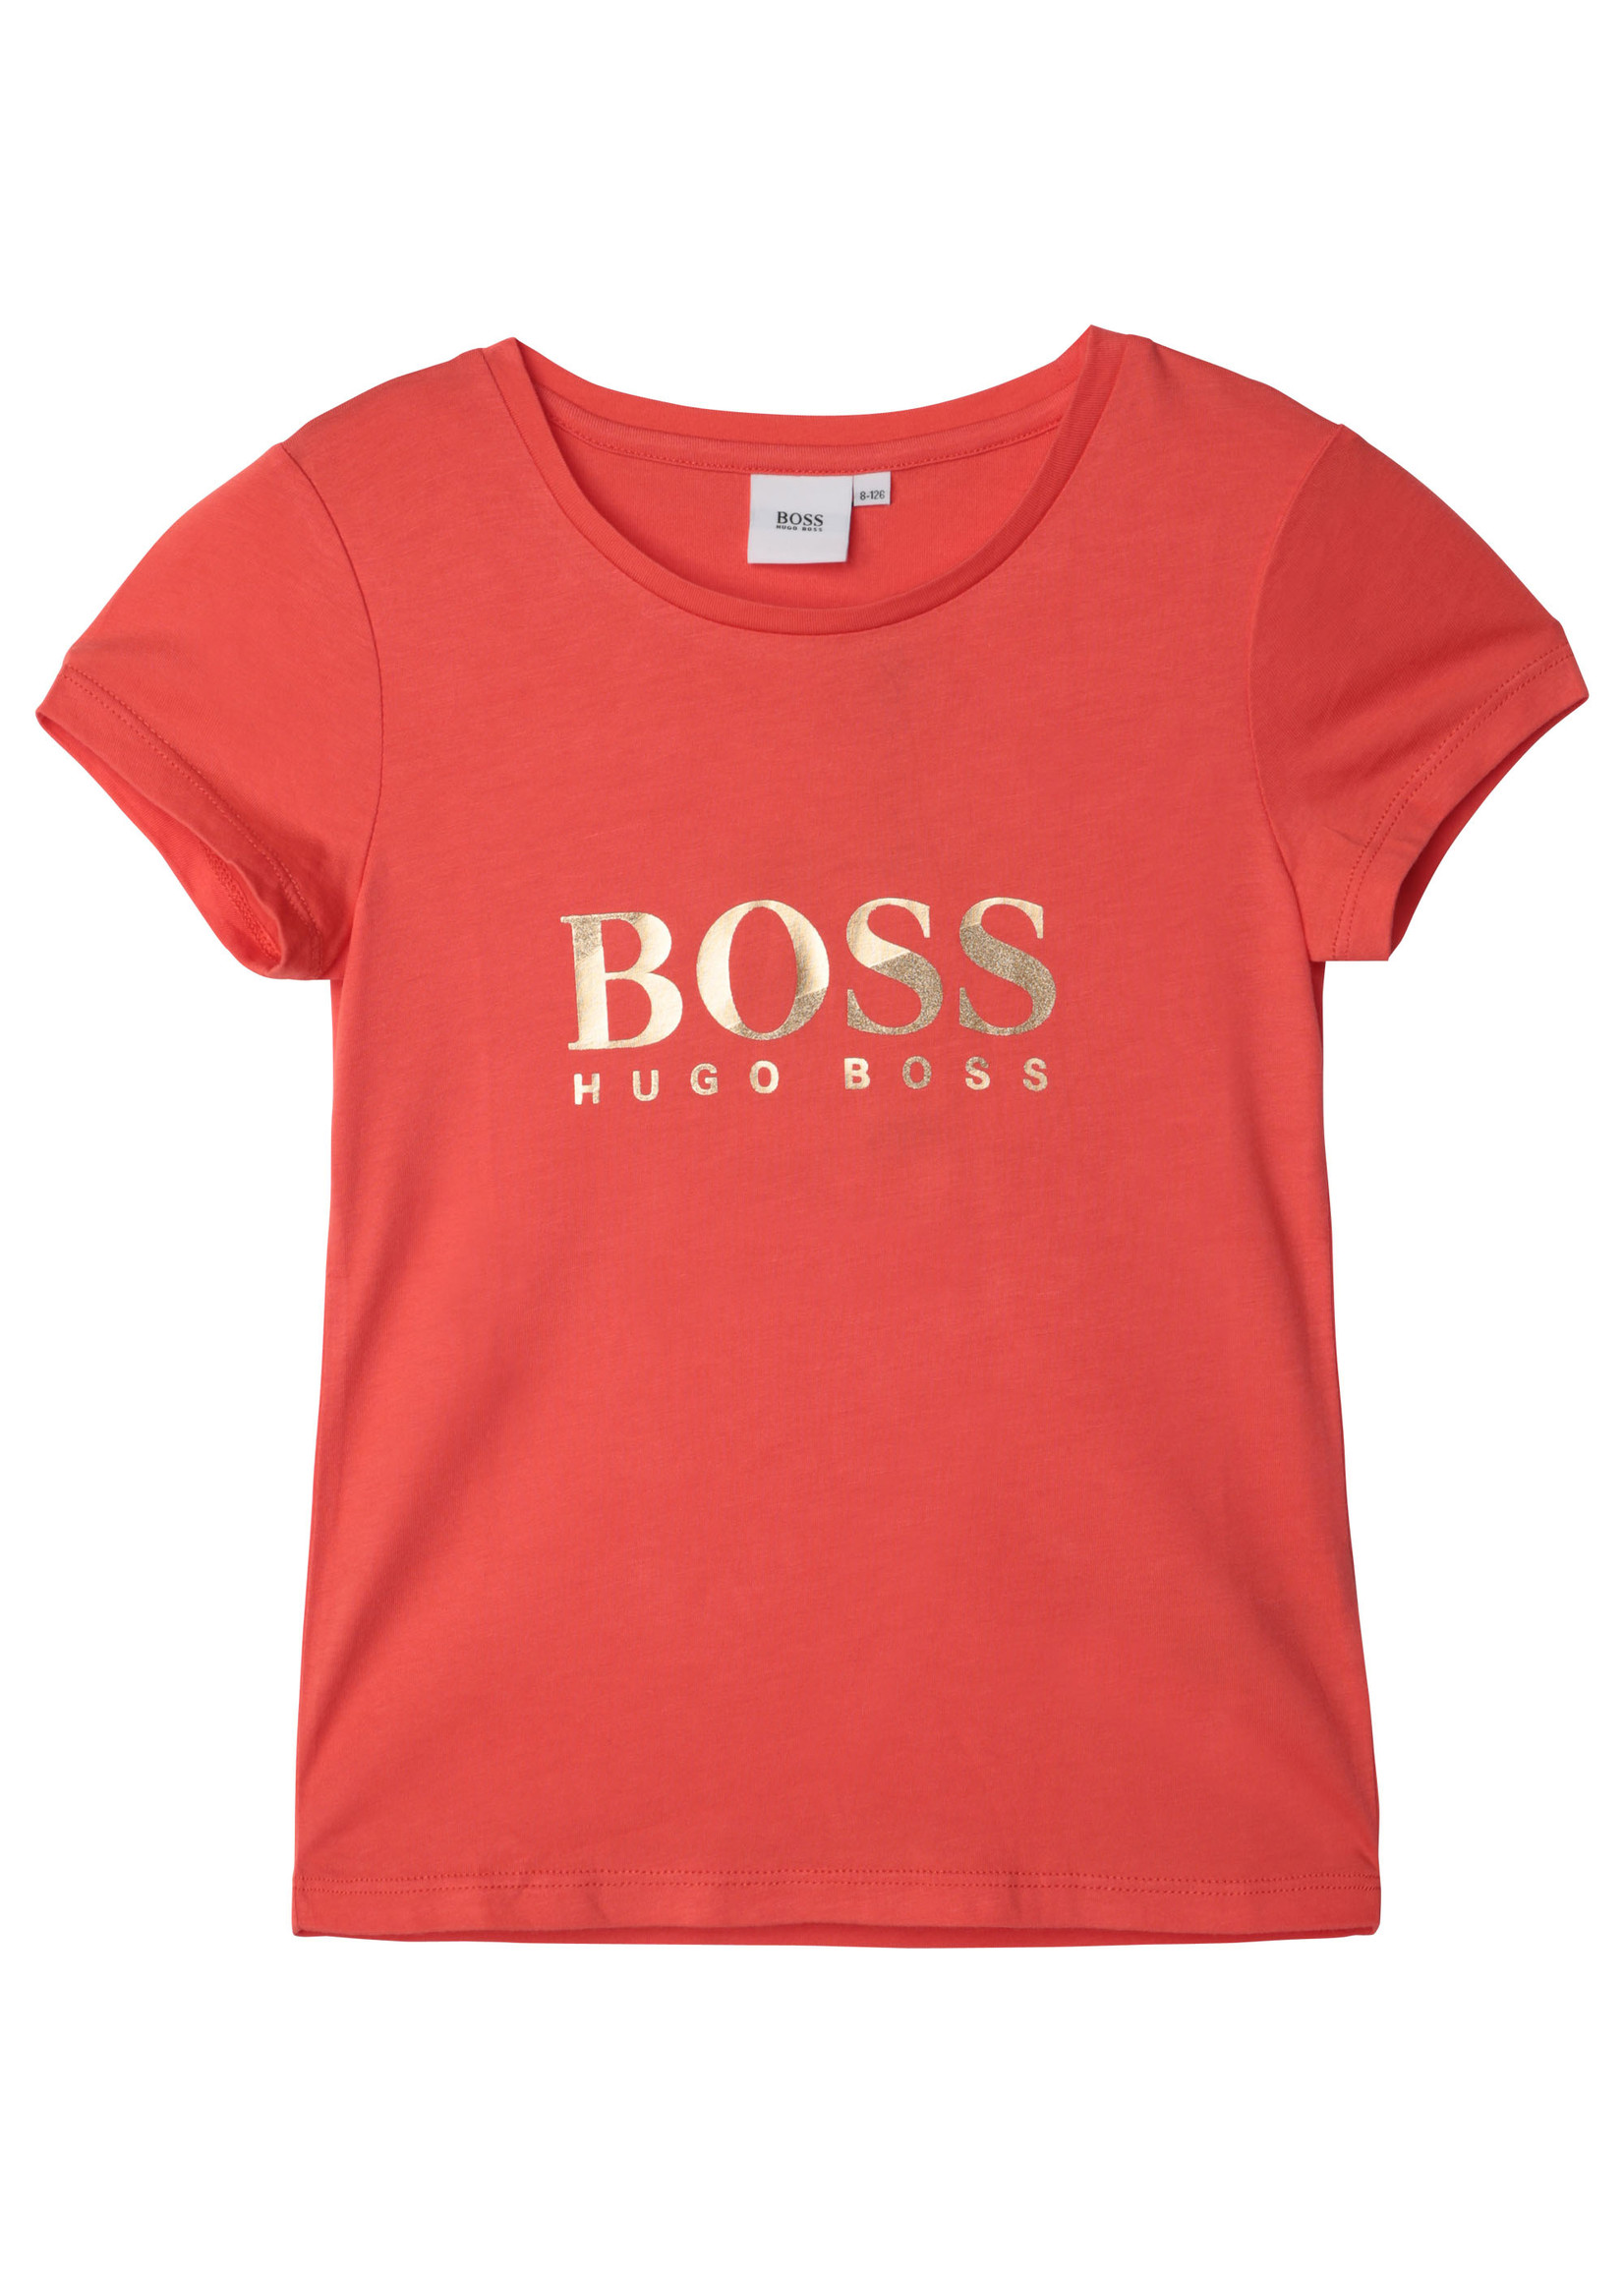 HUGO BOSS Tshirt "BOSS" mandarin